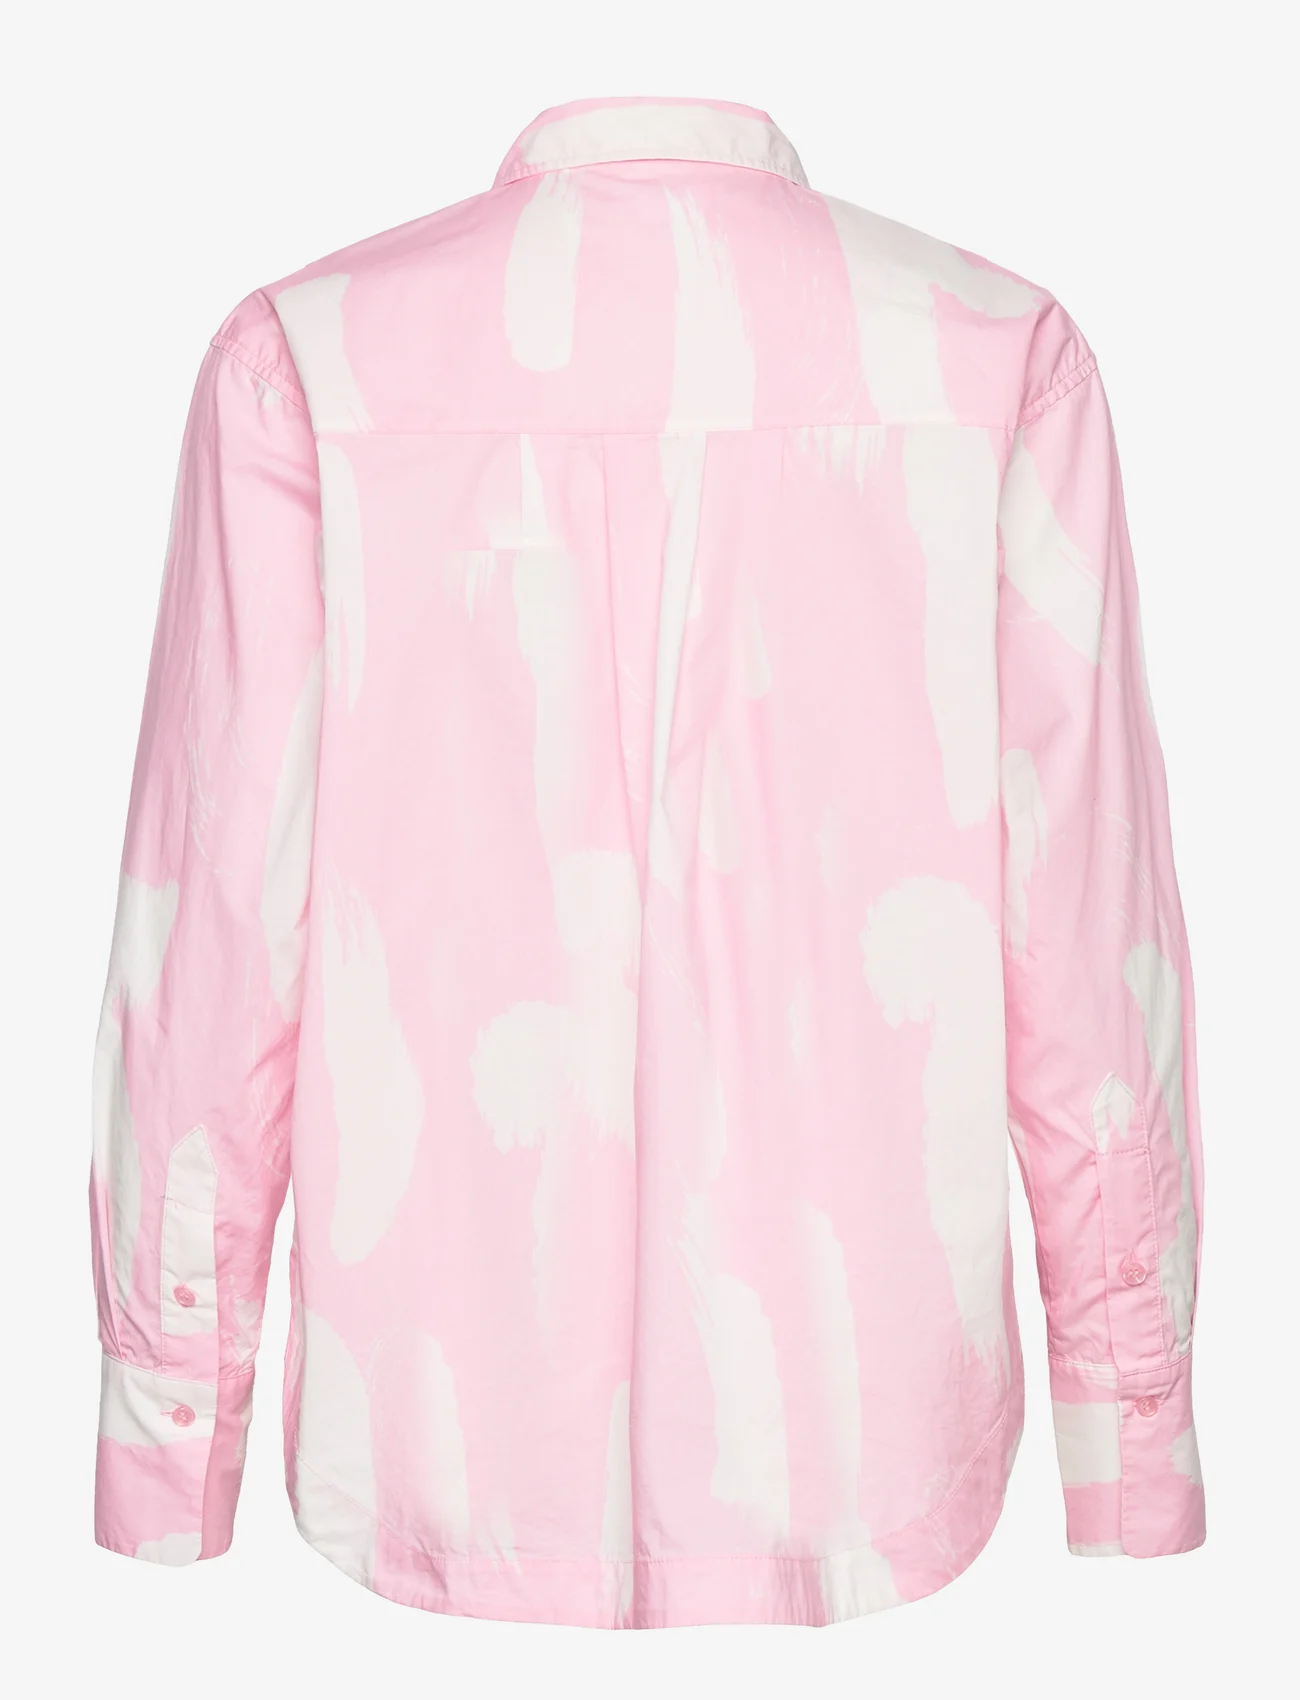 Levete Room - LR-ANNIKA - langärmlige hemden - l430c - powder pink combi - 1